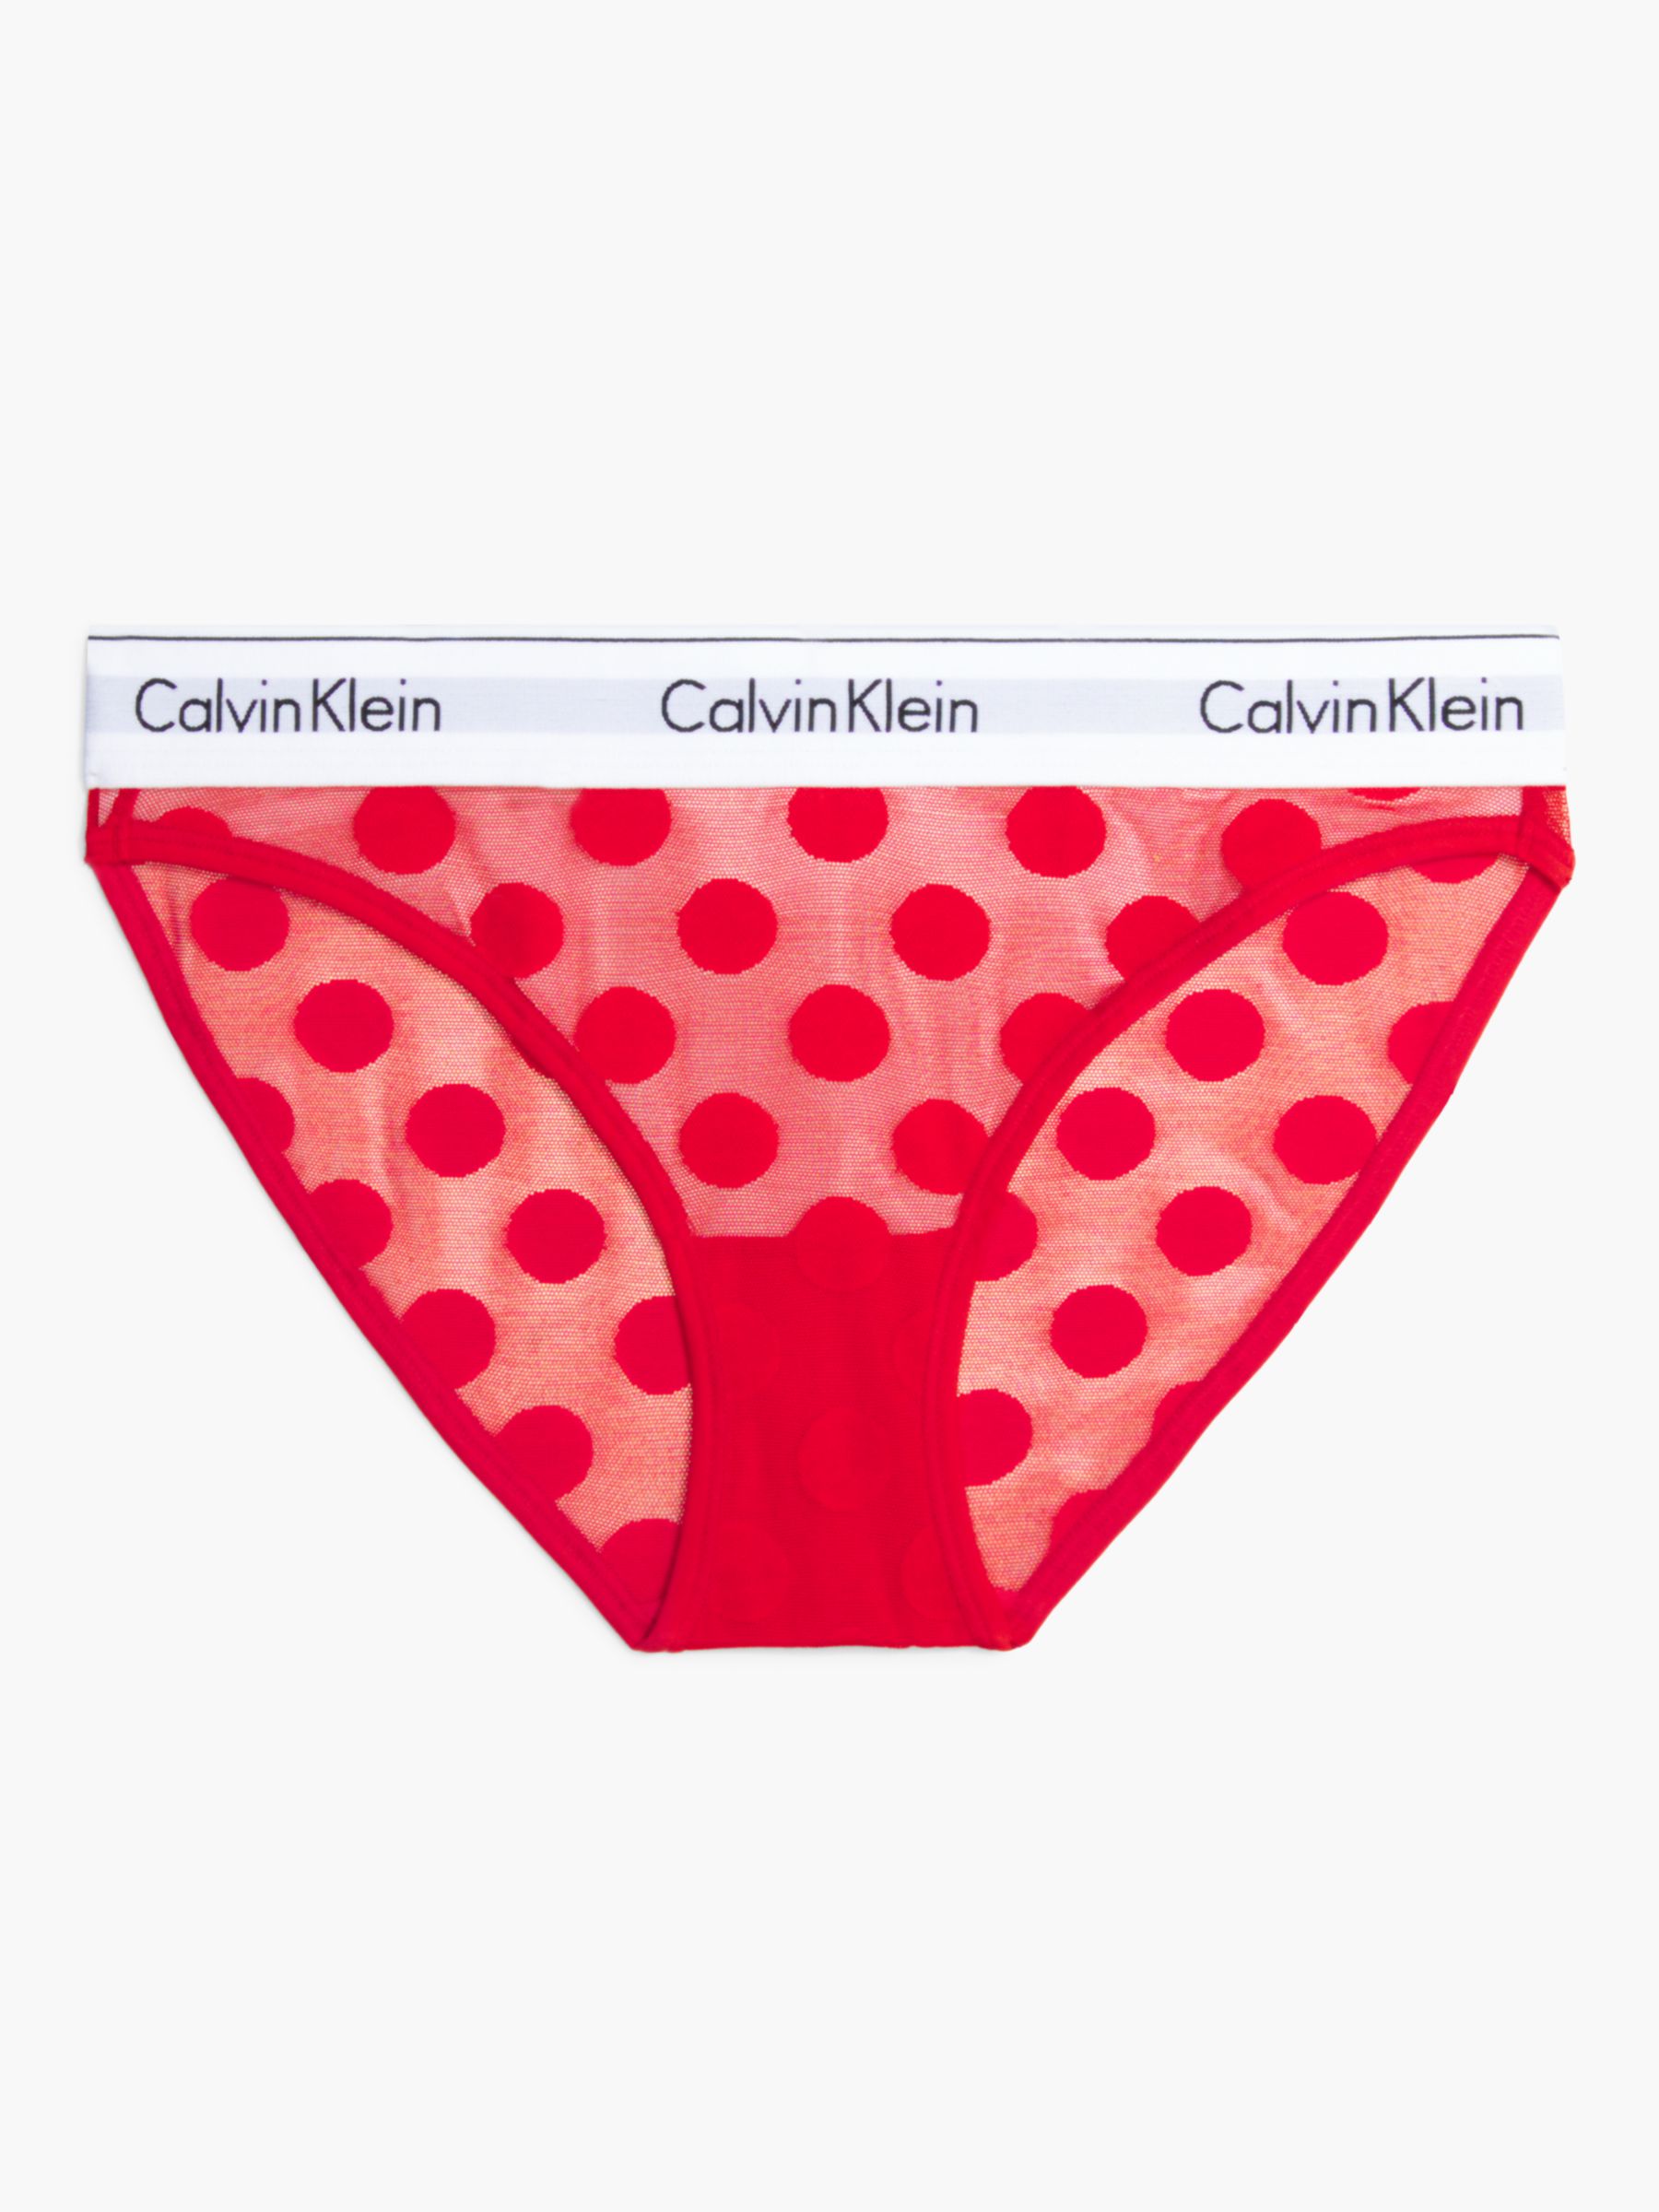 Calvin Klein Modern Cotton Dot thong in white